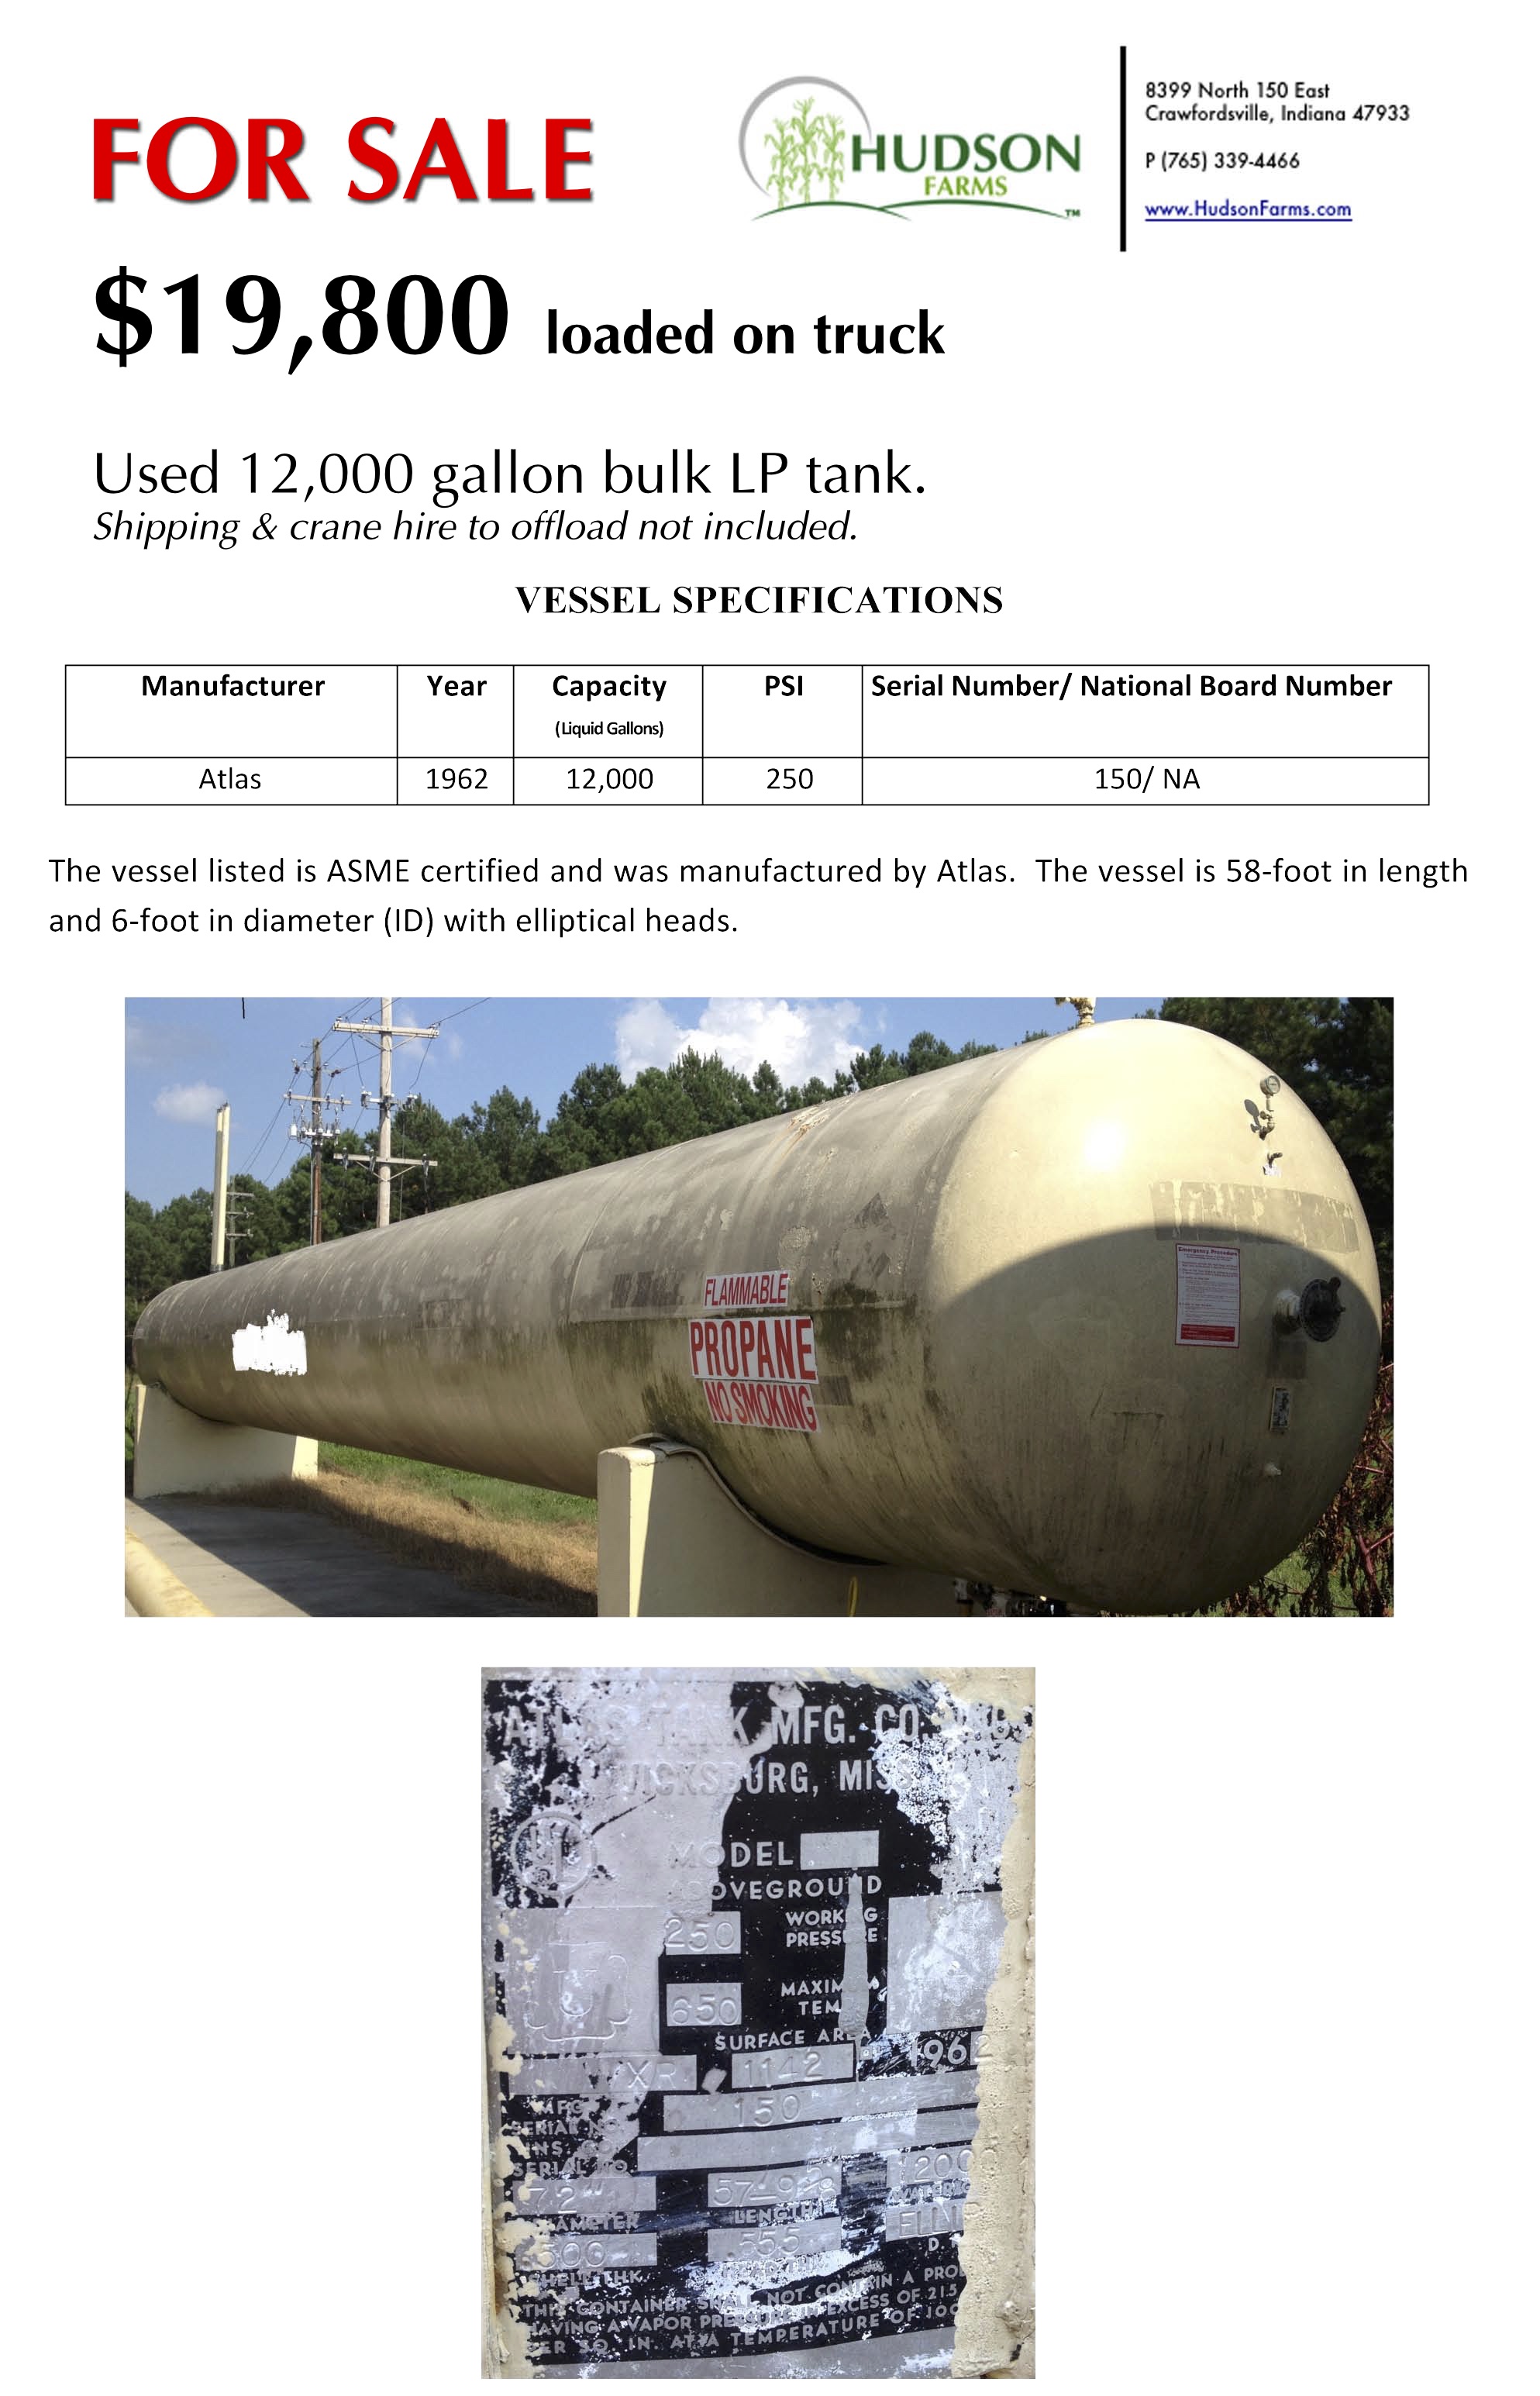 12,000 gal. bulk LP tank/vessel